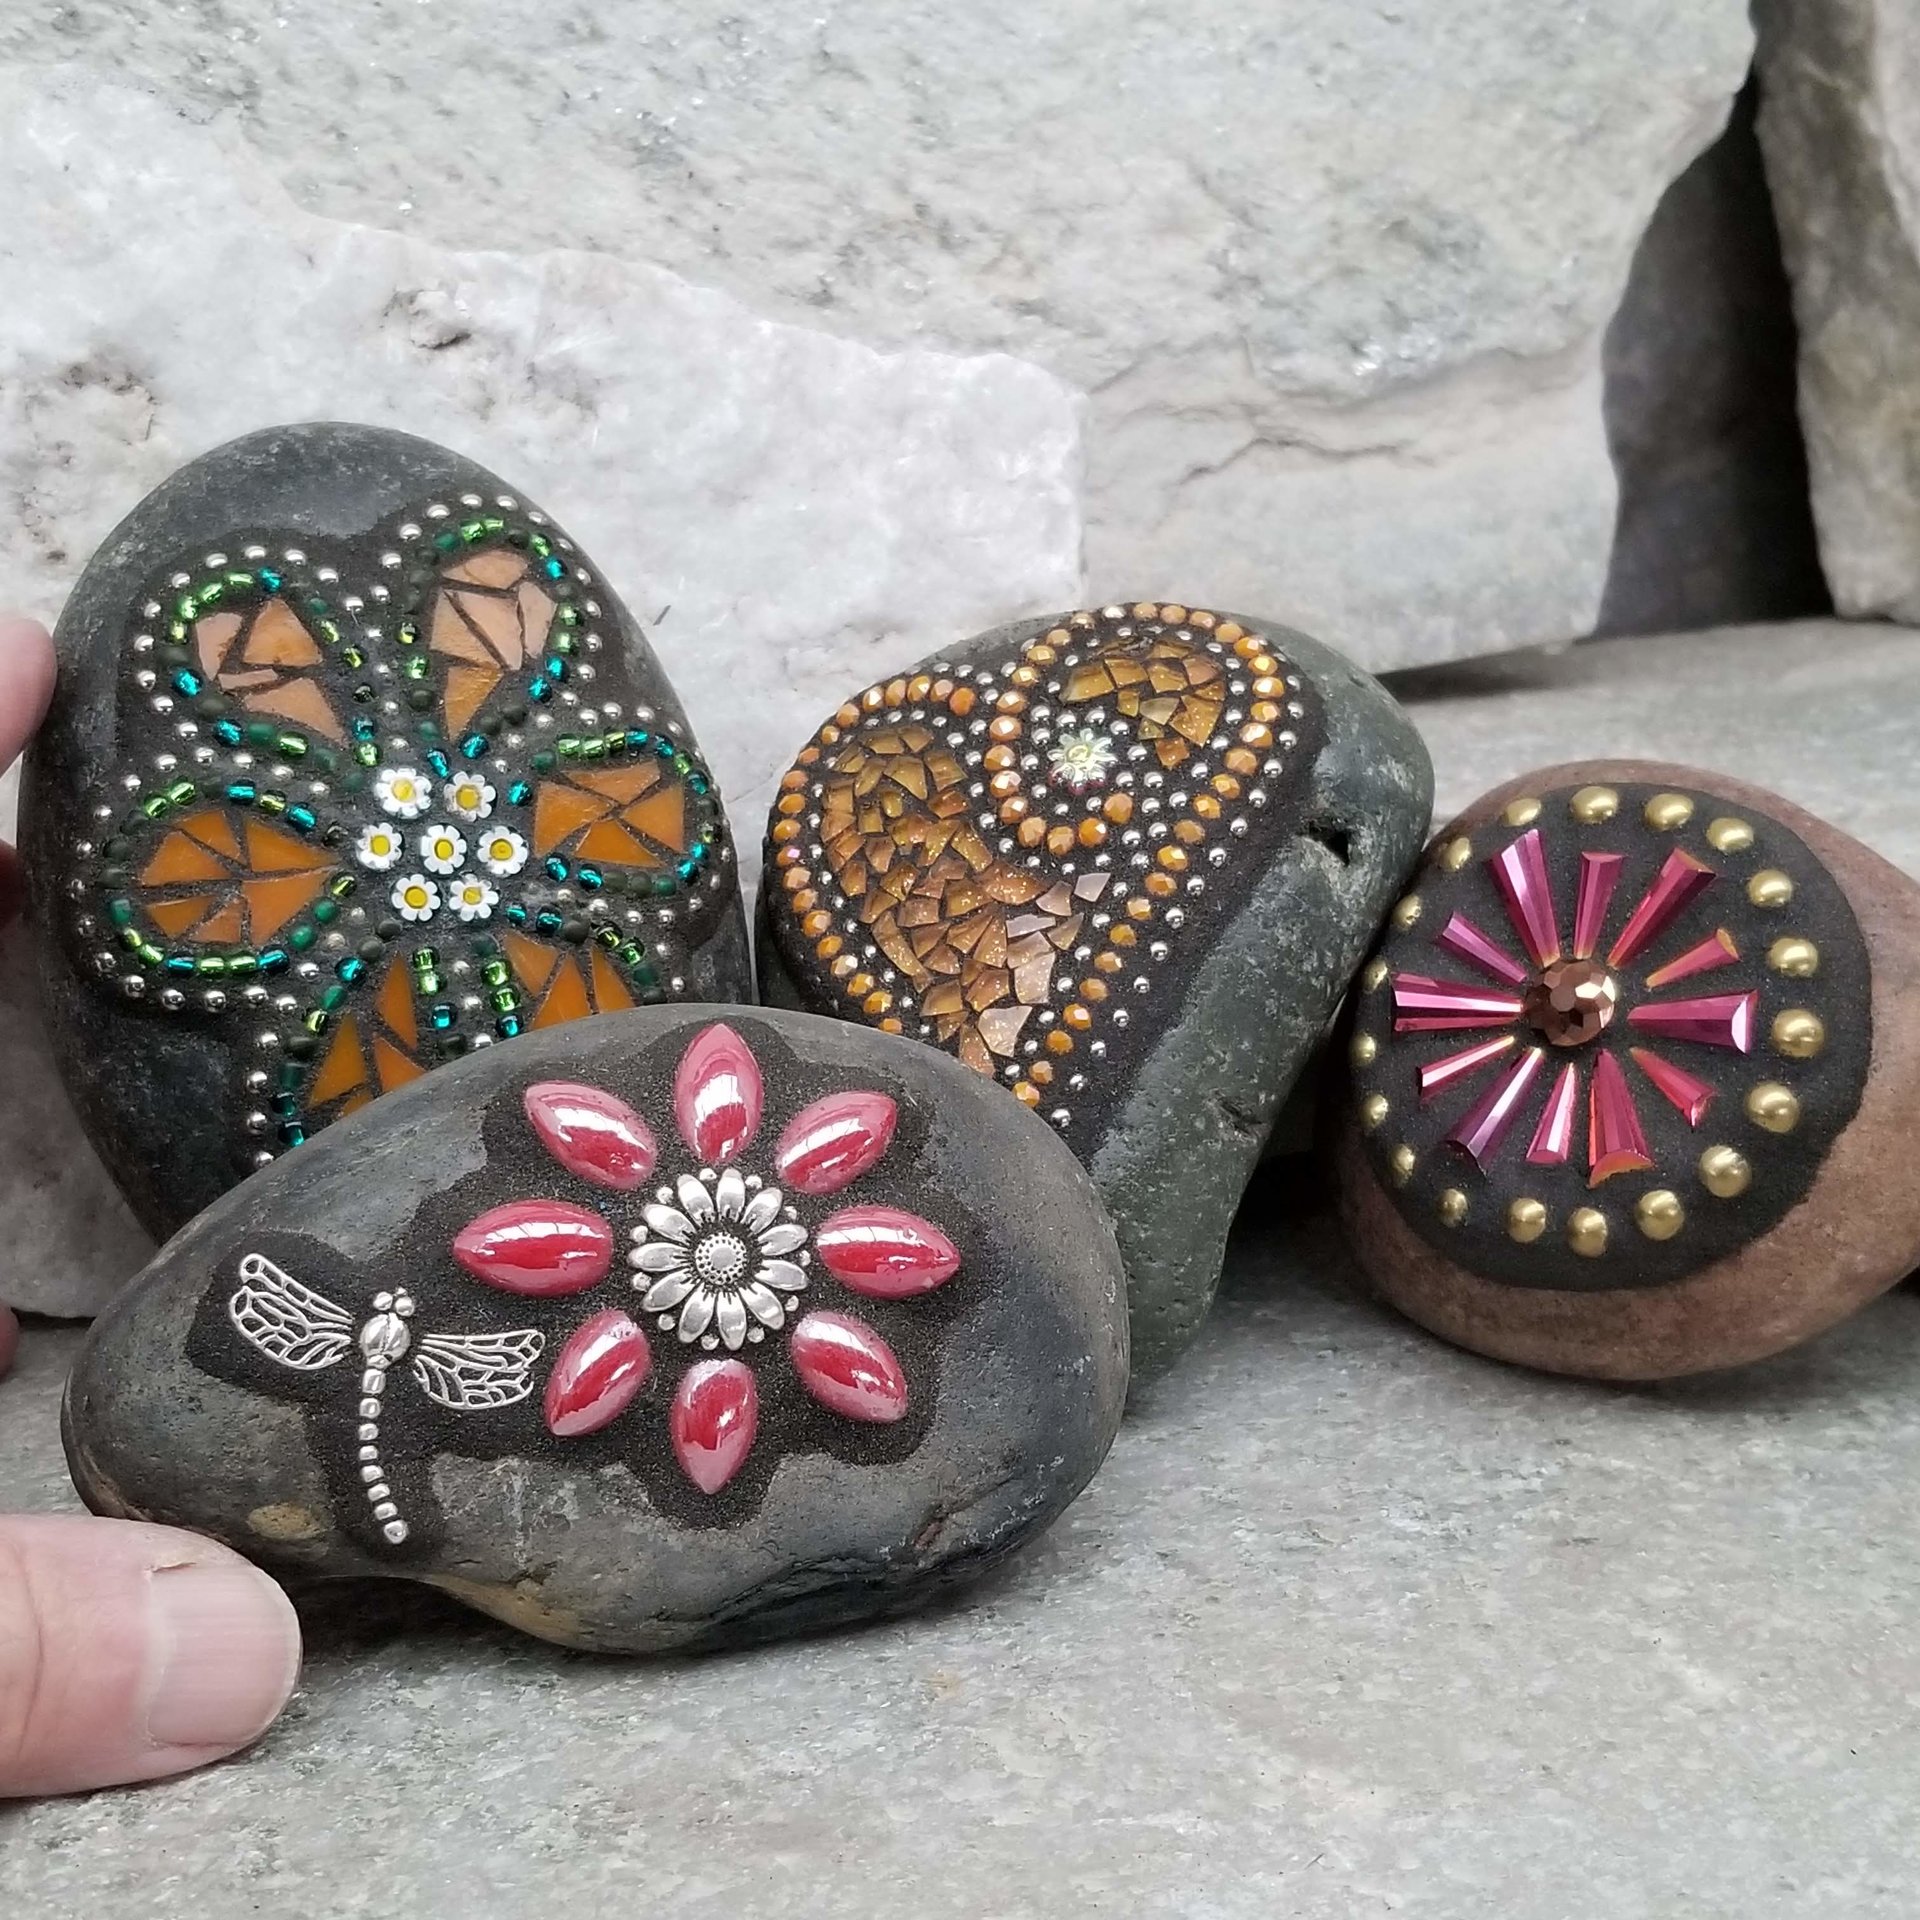 Garden Stone Paperweights, Secret Santa Stocking Stuffer, #1 Group Mosaic Heart and Rocks, Mosaic Garden Stone, Home Decor, Gardening, Gardening Gift,